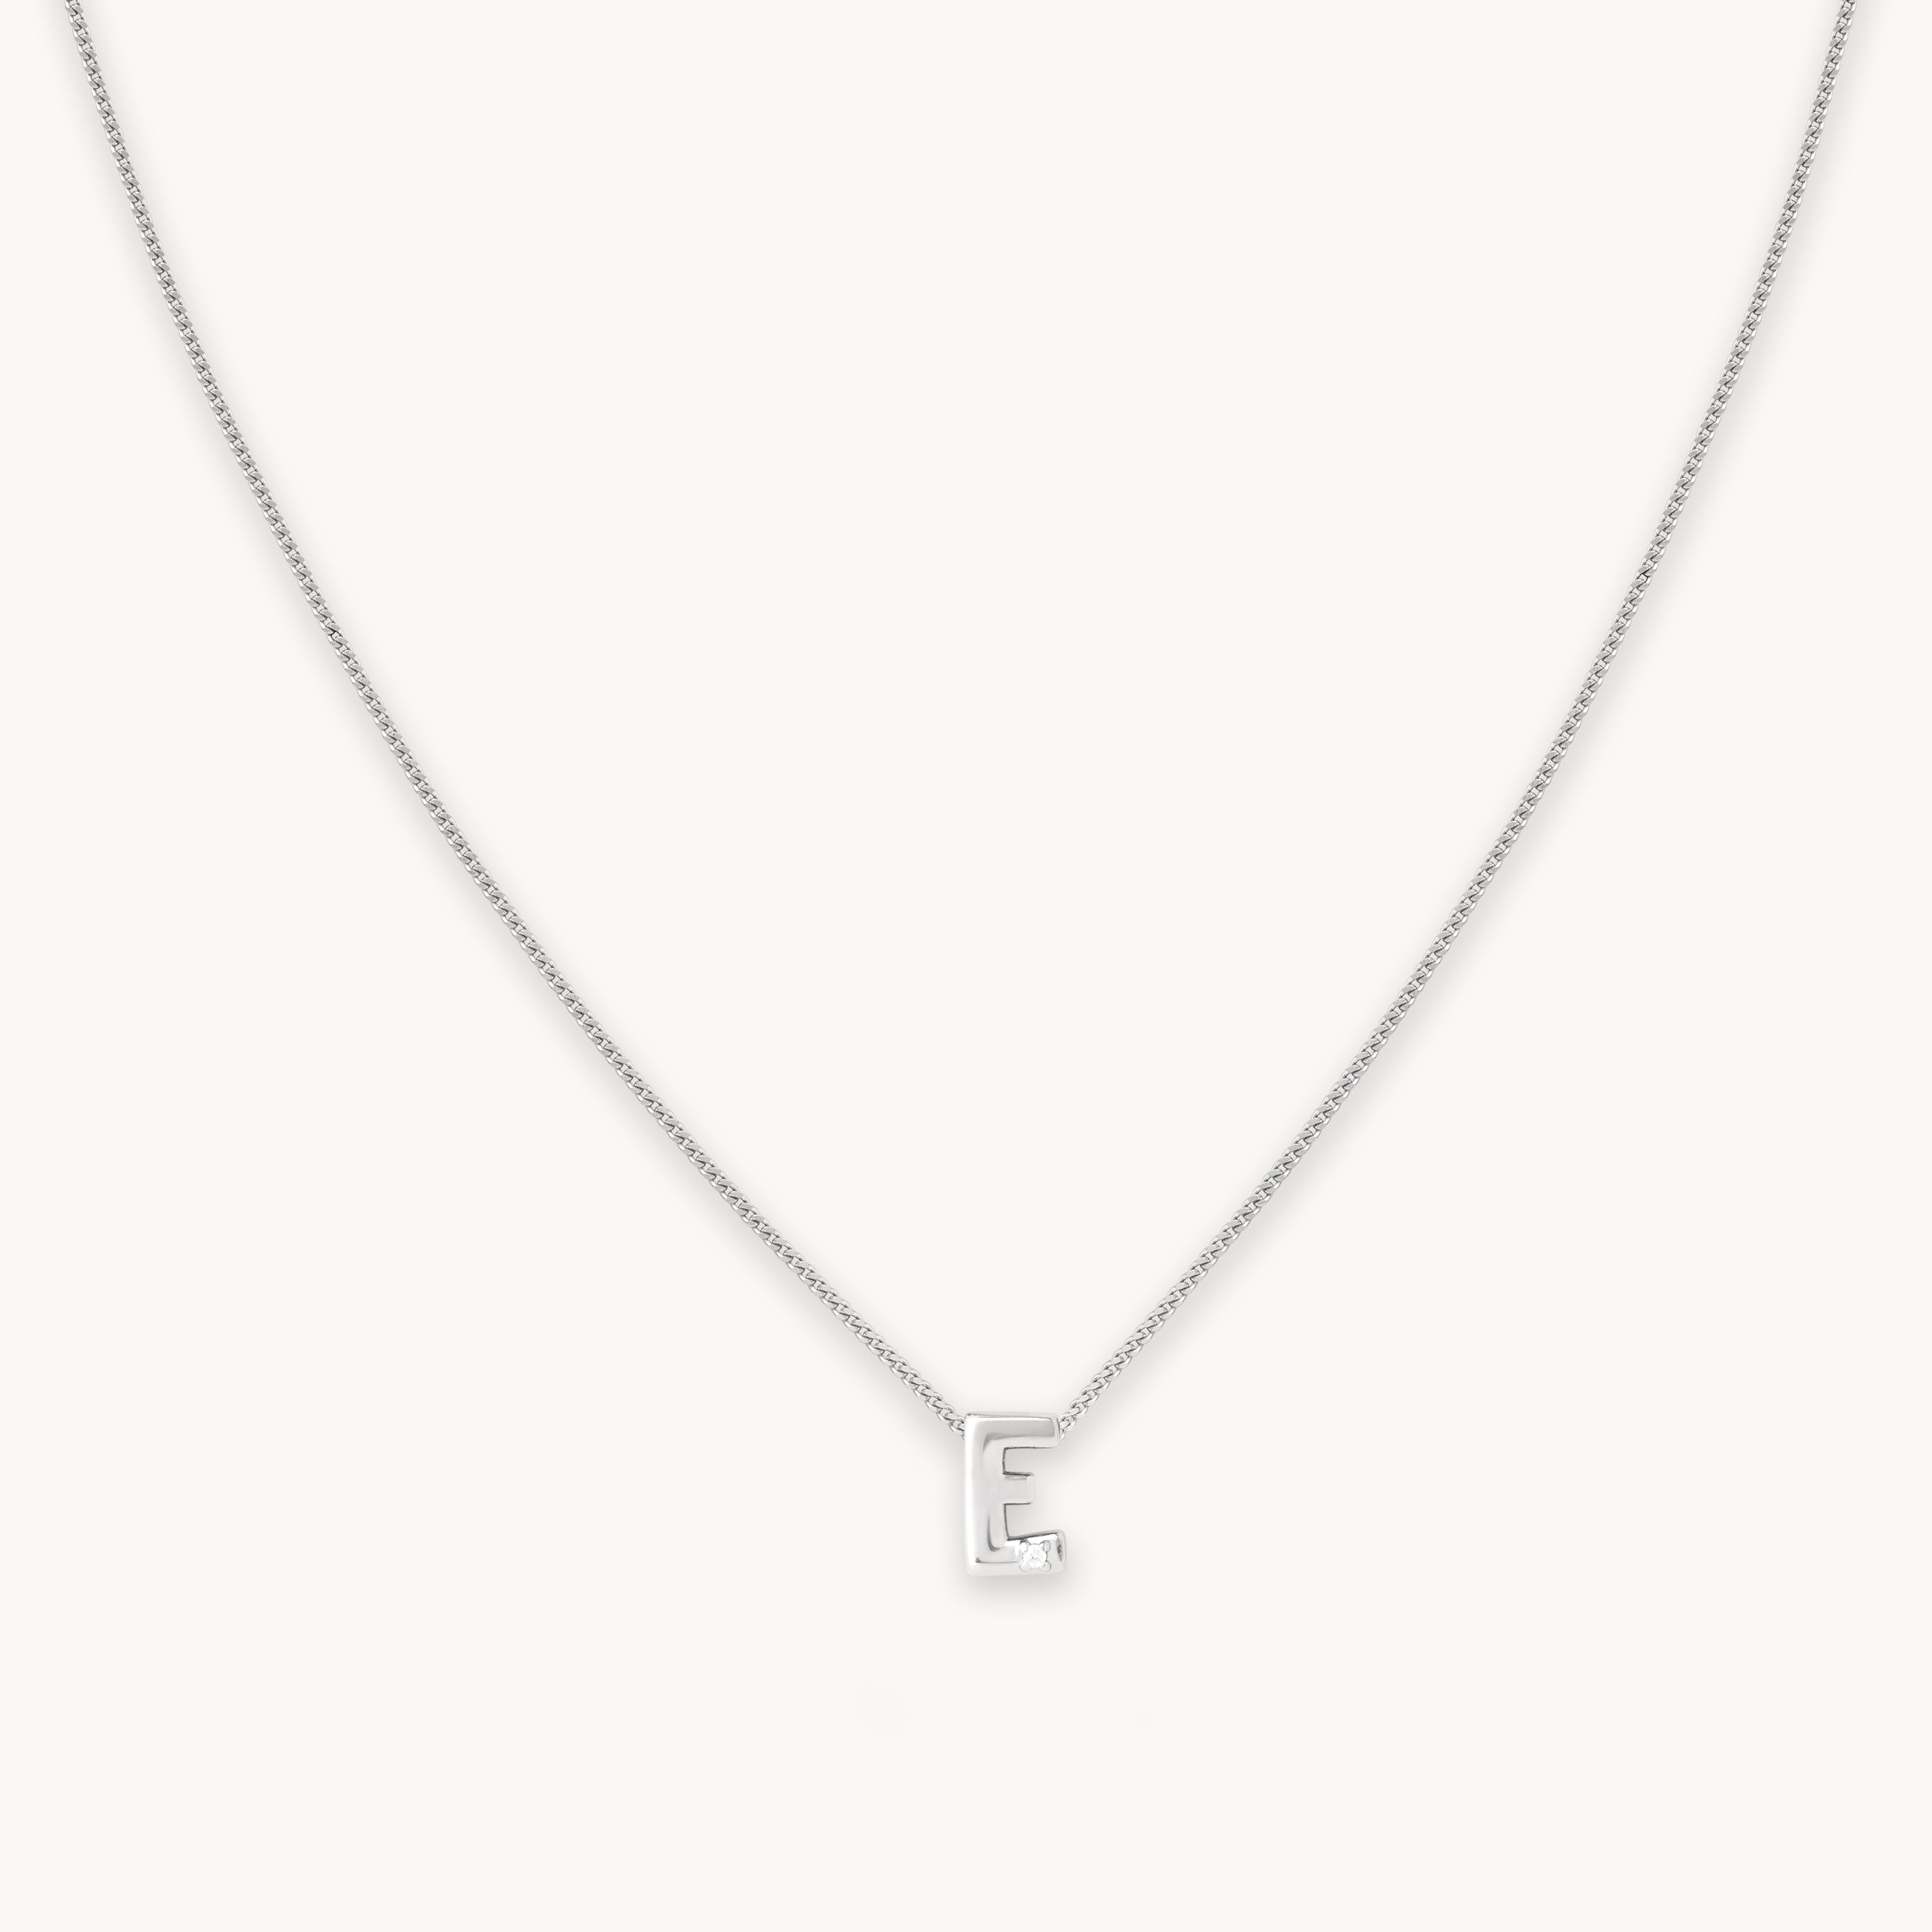 E Initial Pendant Necklace in Silver